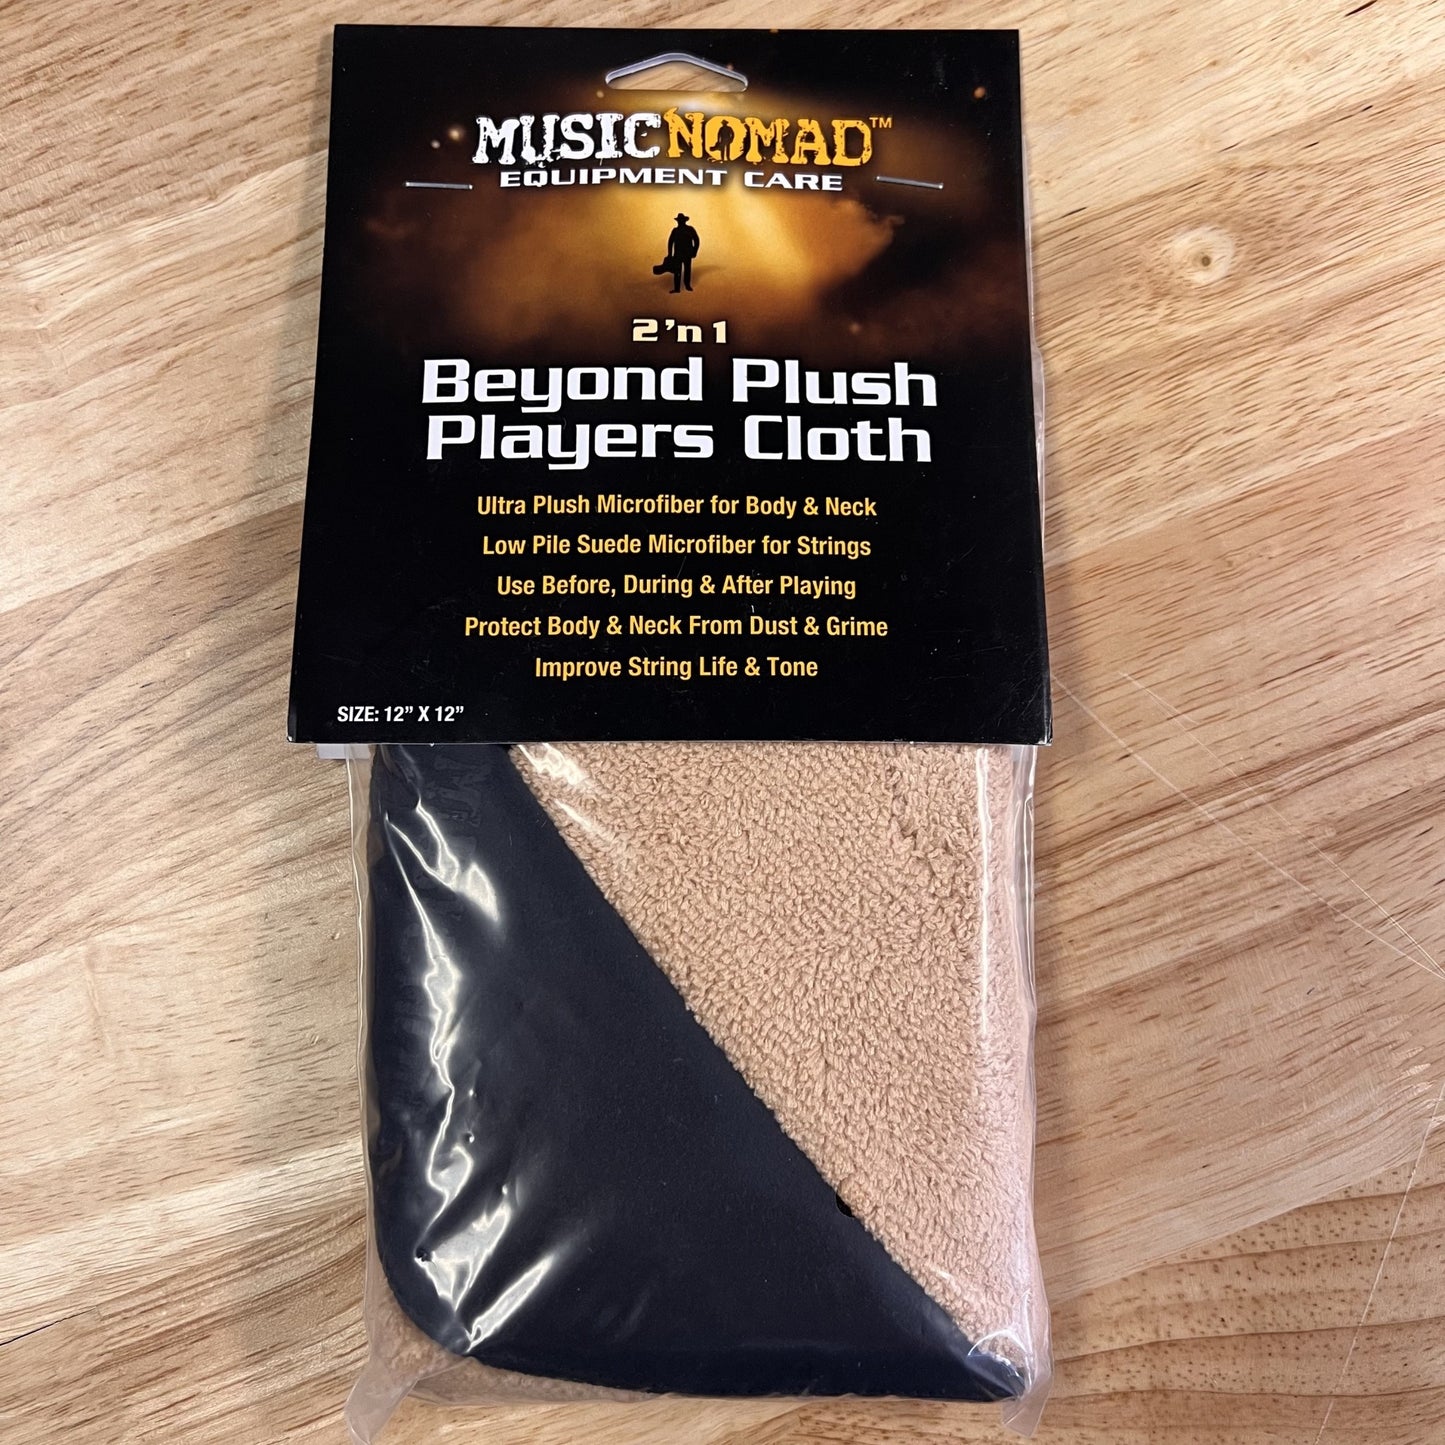 Music Nomad 2 'n 1 Beyond Plush Players Cloth